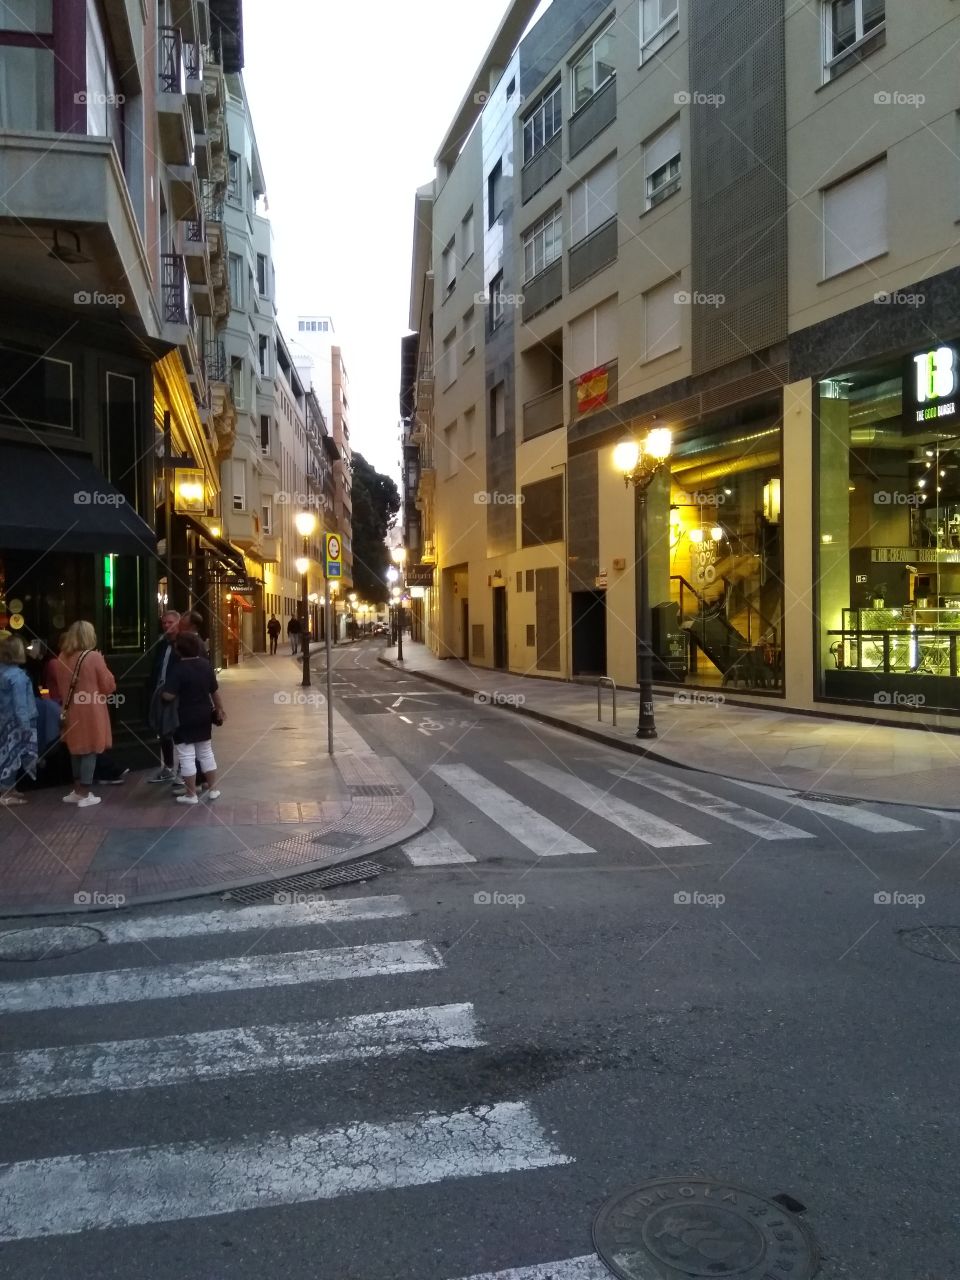 evening street in Spain